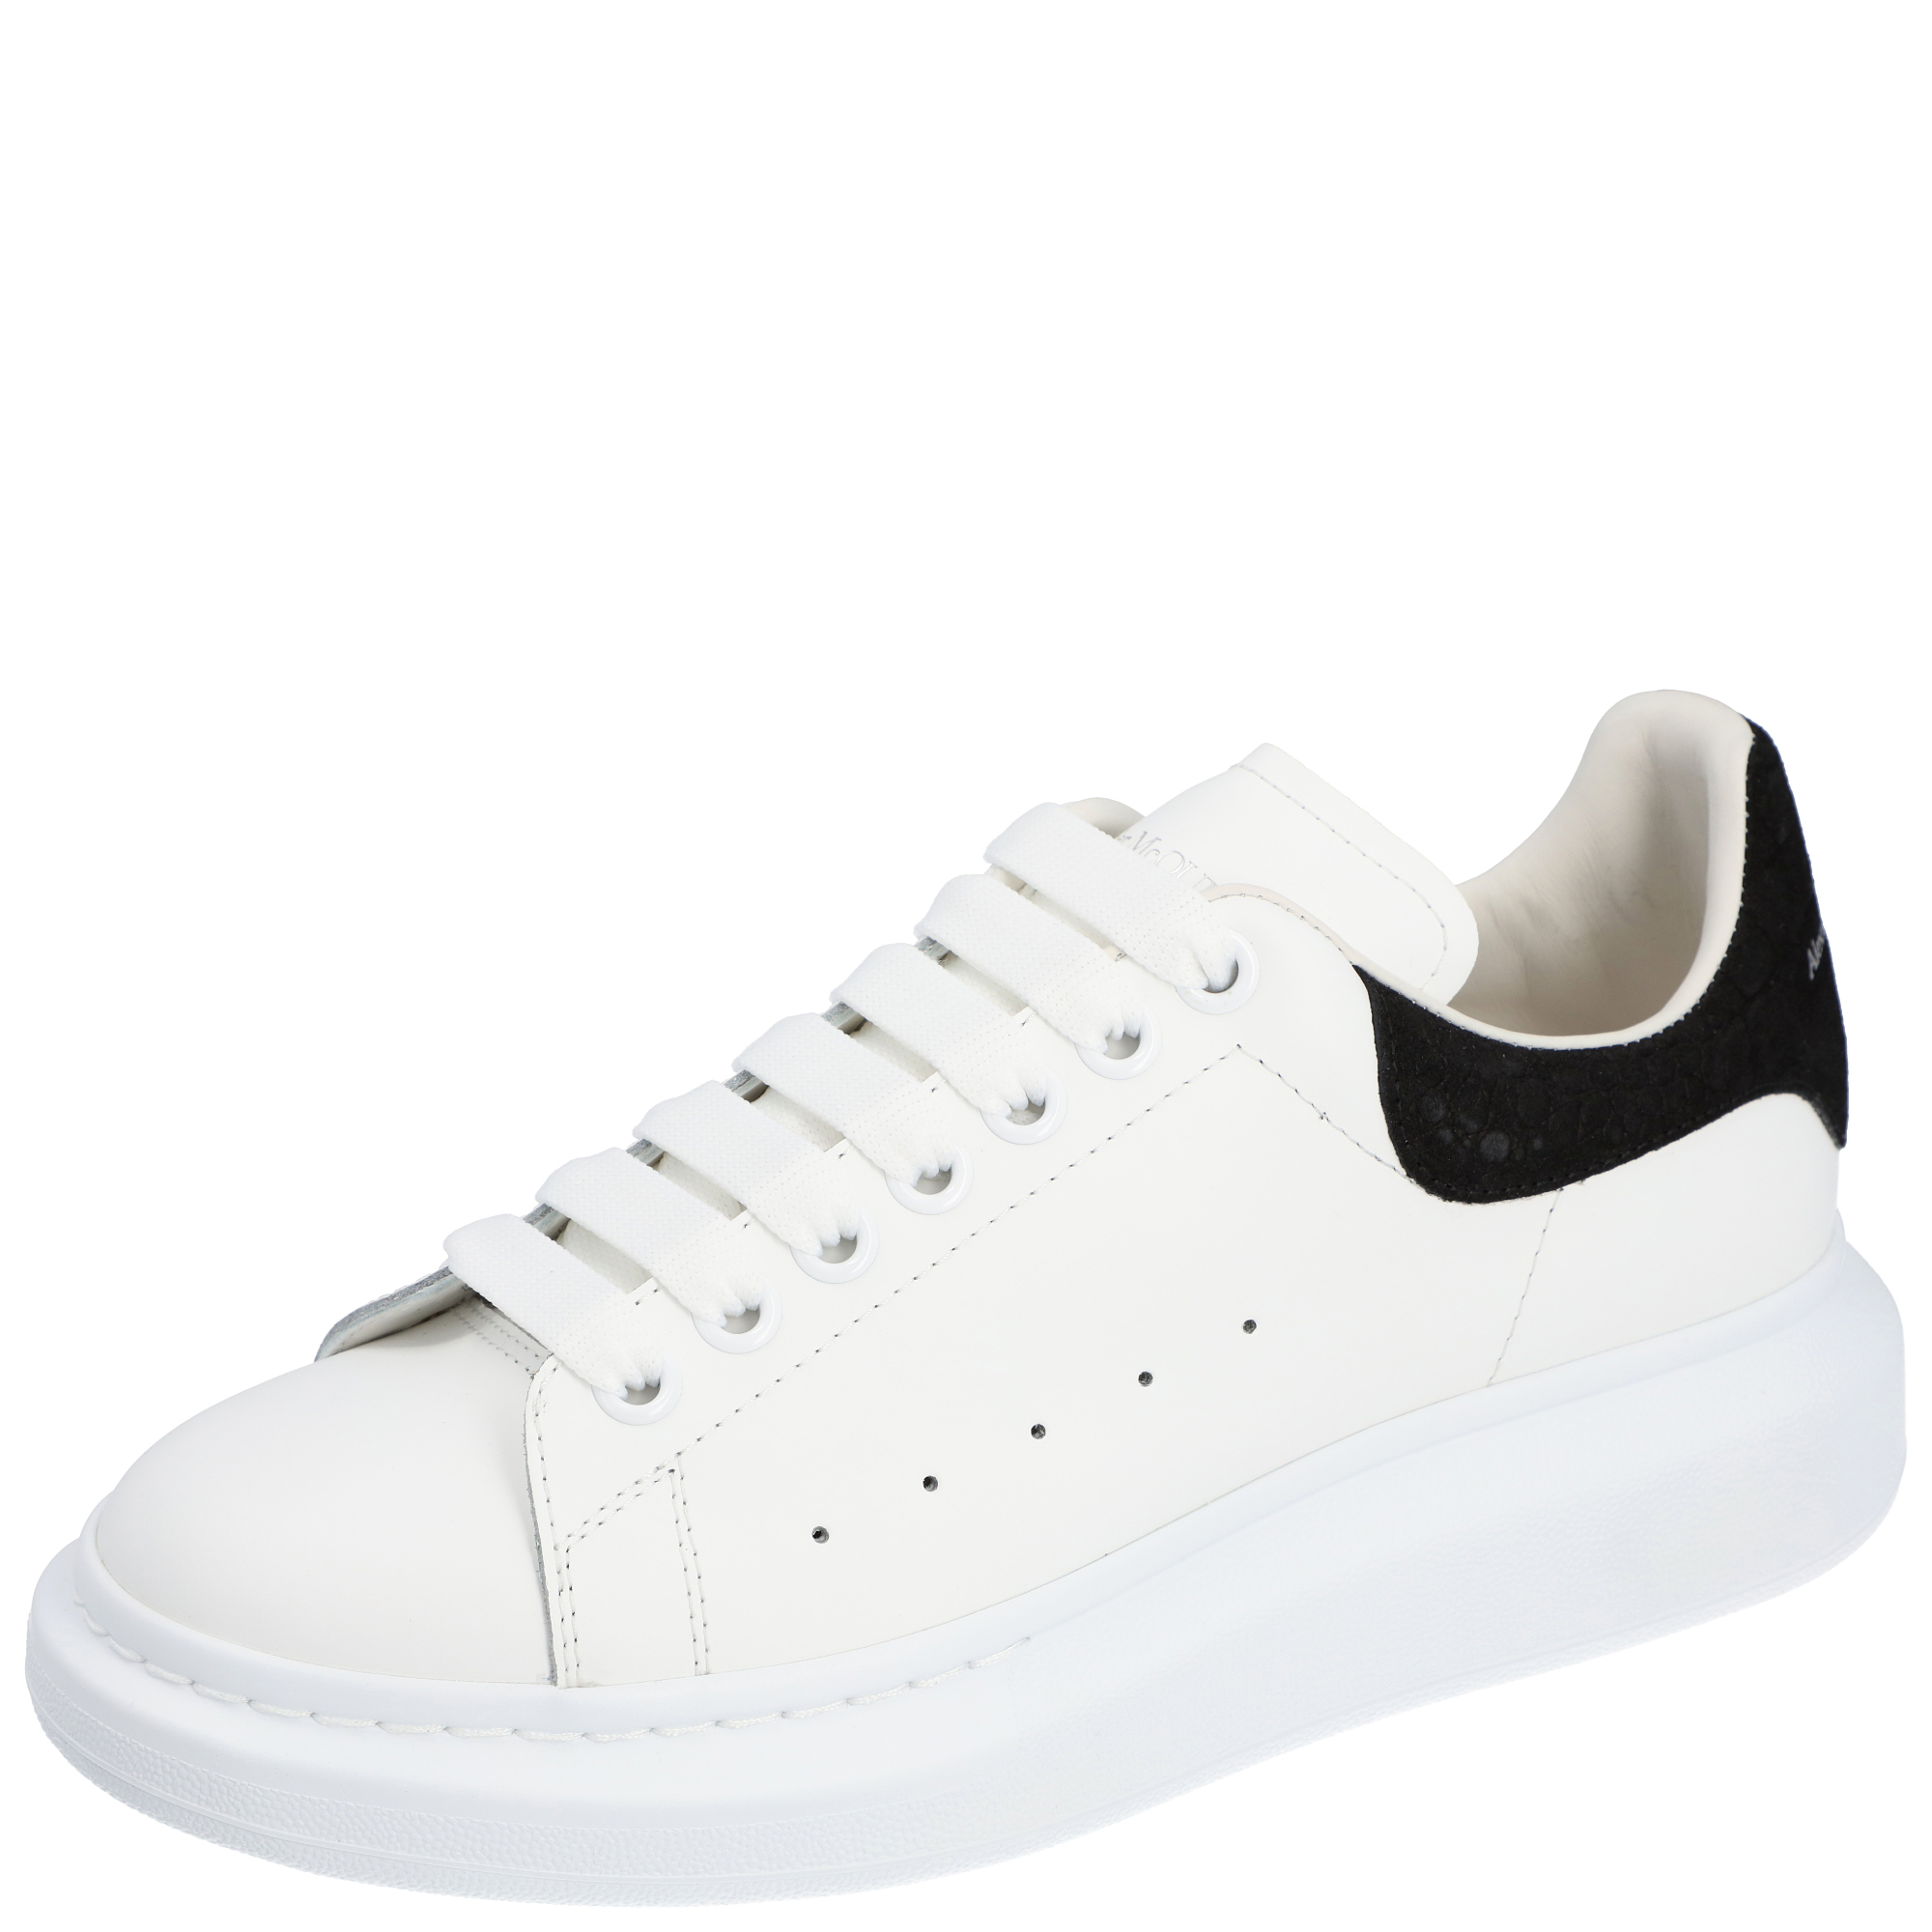 Alexander McQueen White/Black Oversized Sneakers Size EU 42